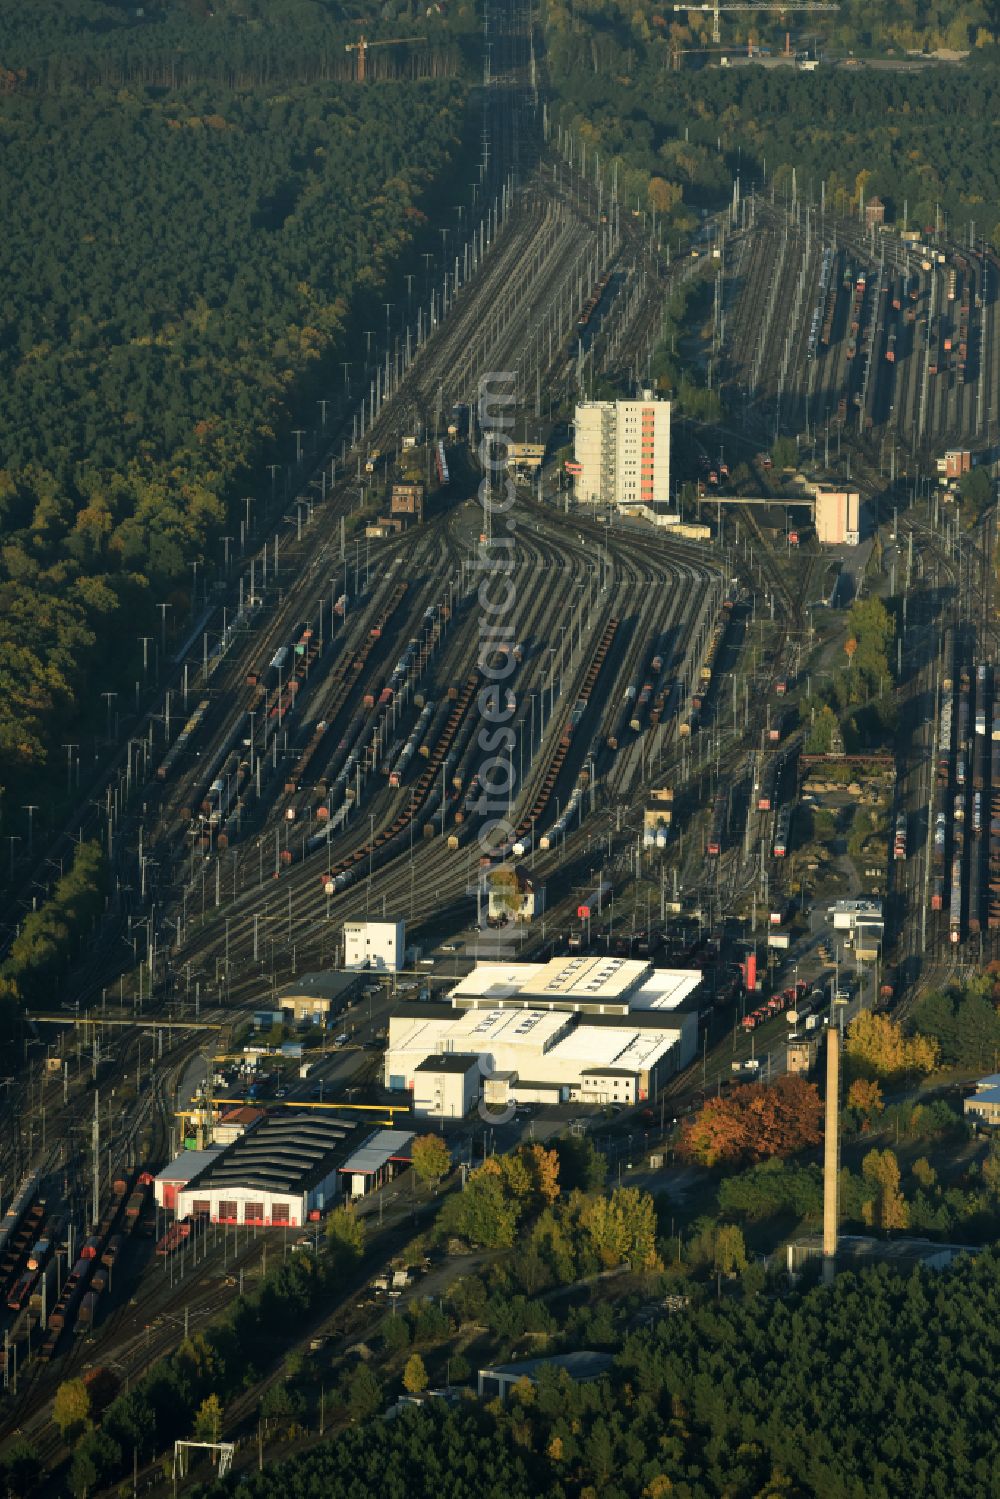 Neuseddin from the bird's eye view: Marshalling yard and freight station of the Deutsche Bahn in Neuseddin in the state Brandenburg